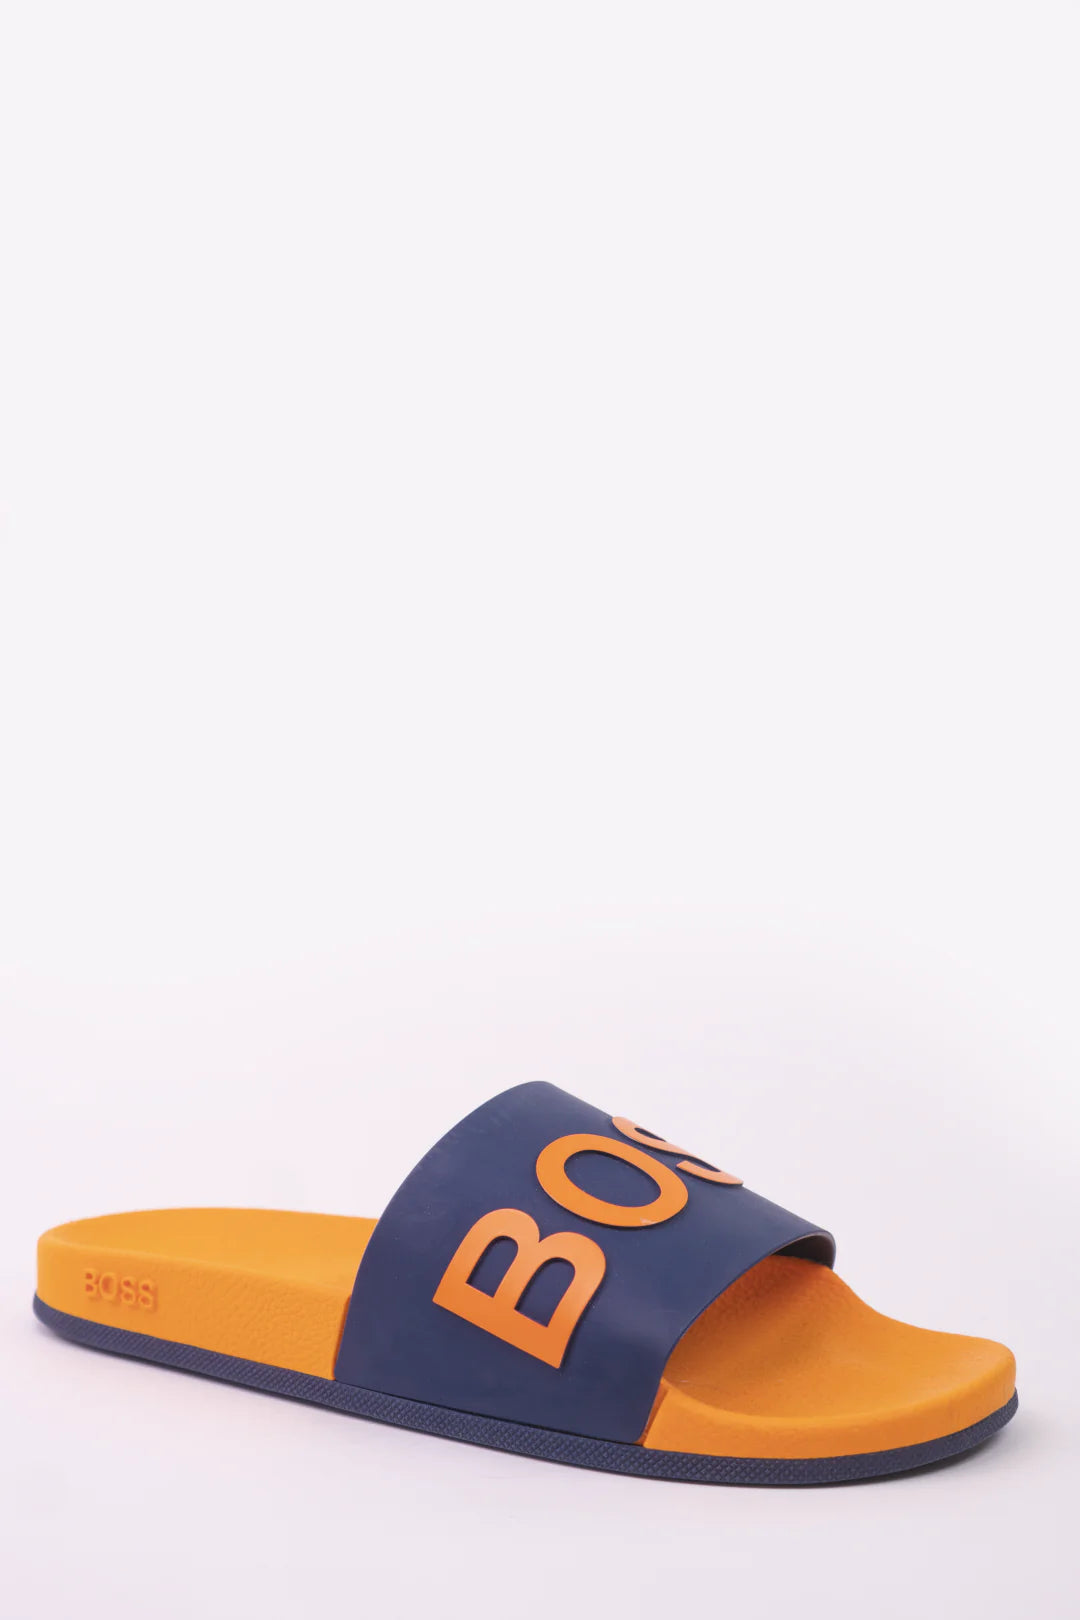 Sandale Hugo Boss de couleur Marine/Orange